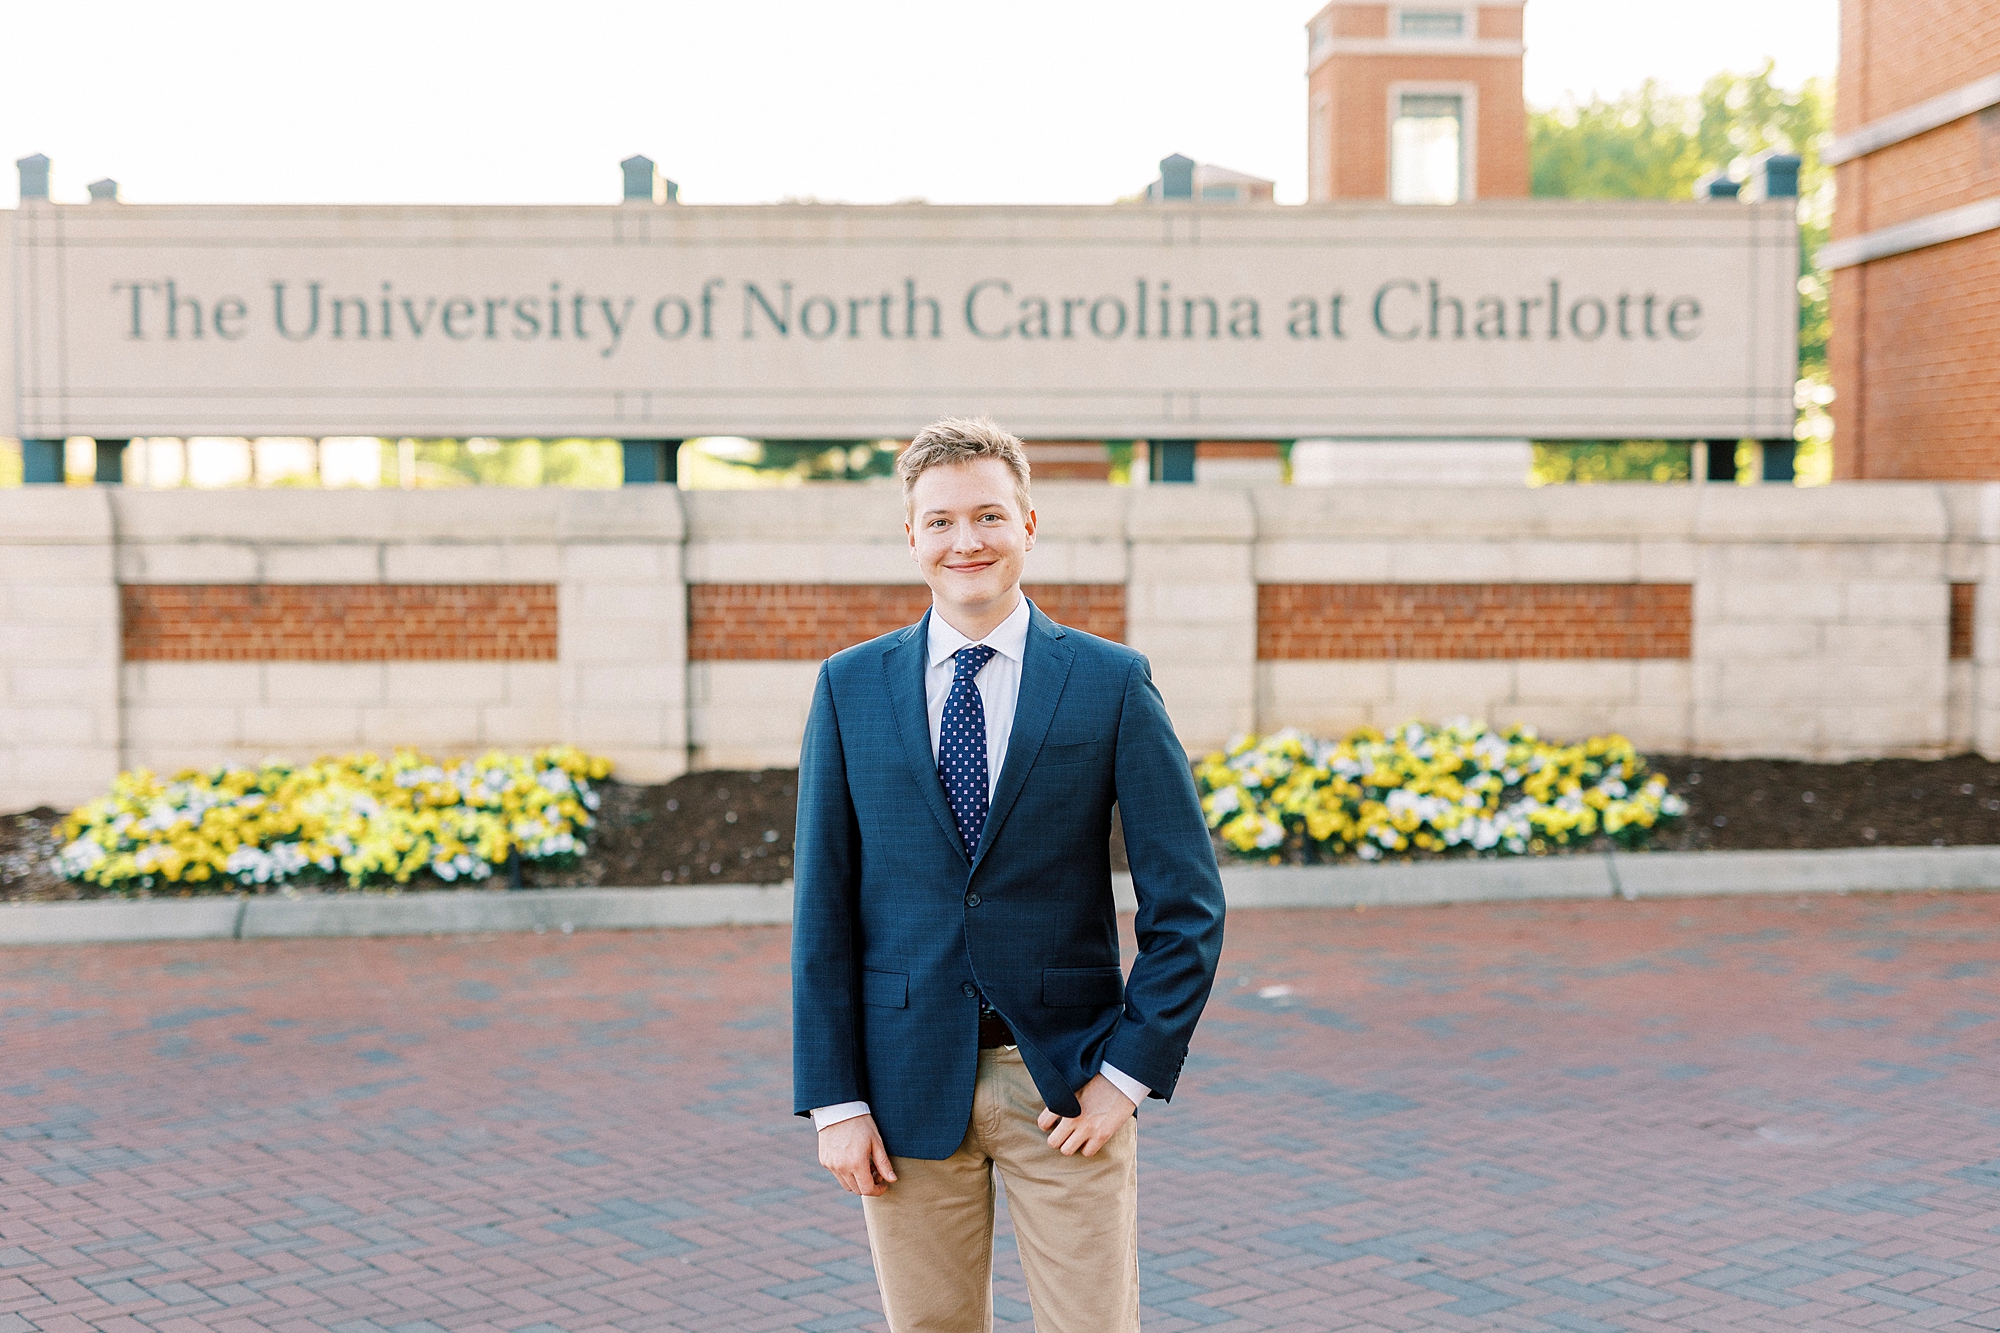 senior in navy jacket with khaki pants stands near University of North Carolina at Charlotte sign